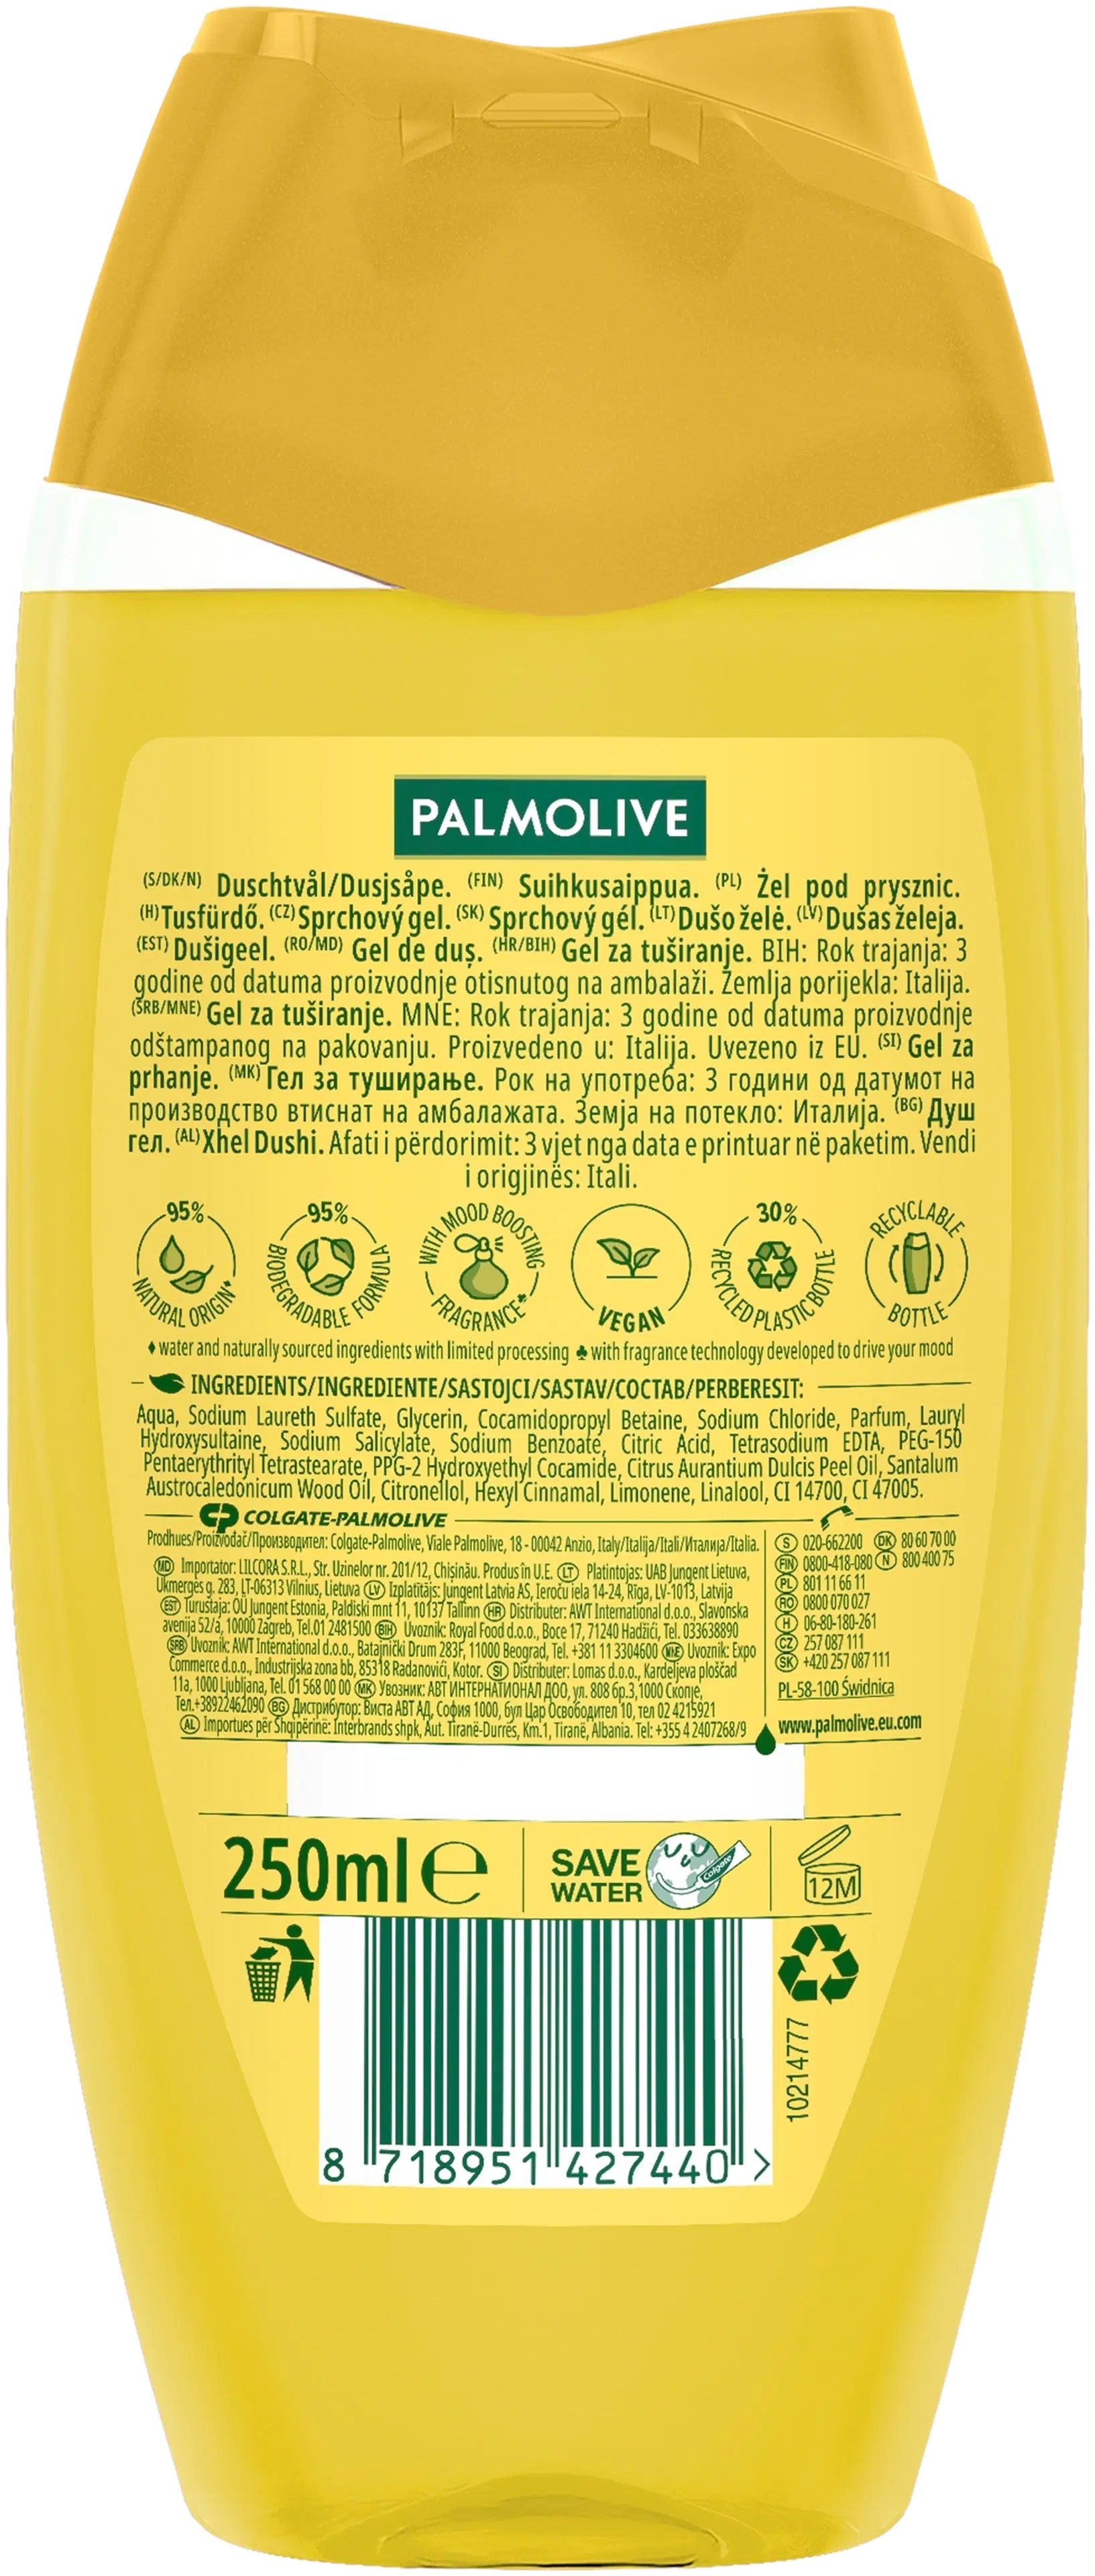 Palmolive Aroma Essence Forever Happy suihkusaippua 250ml